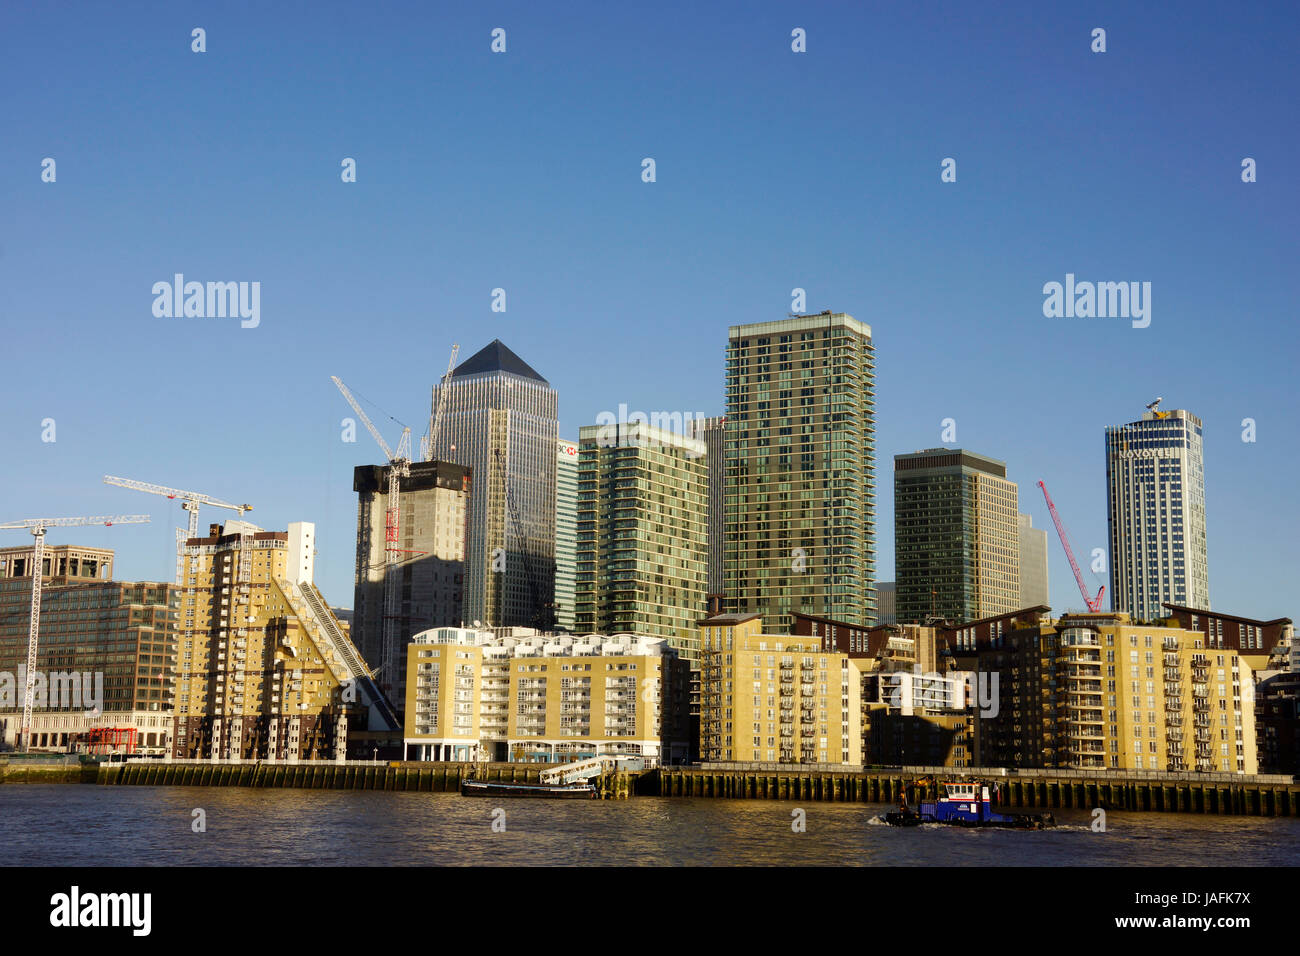 Tall modern finance buildings near Thames river in London UK Stock Photo